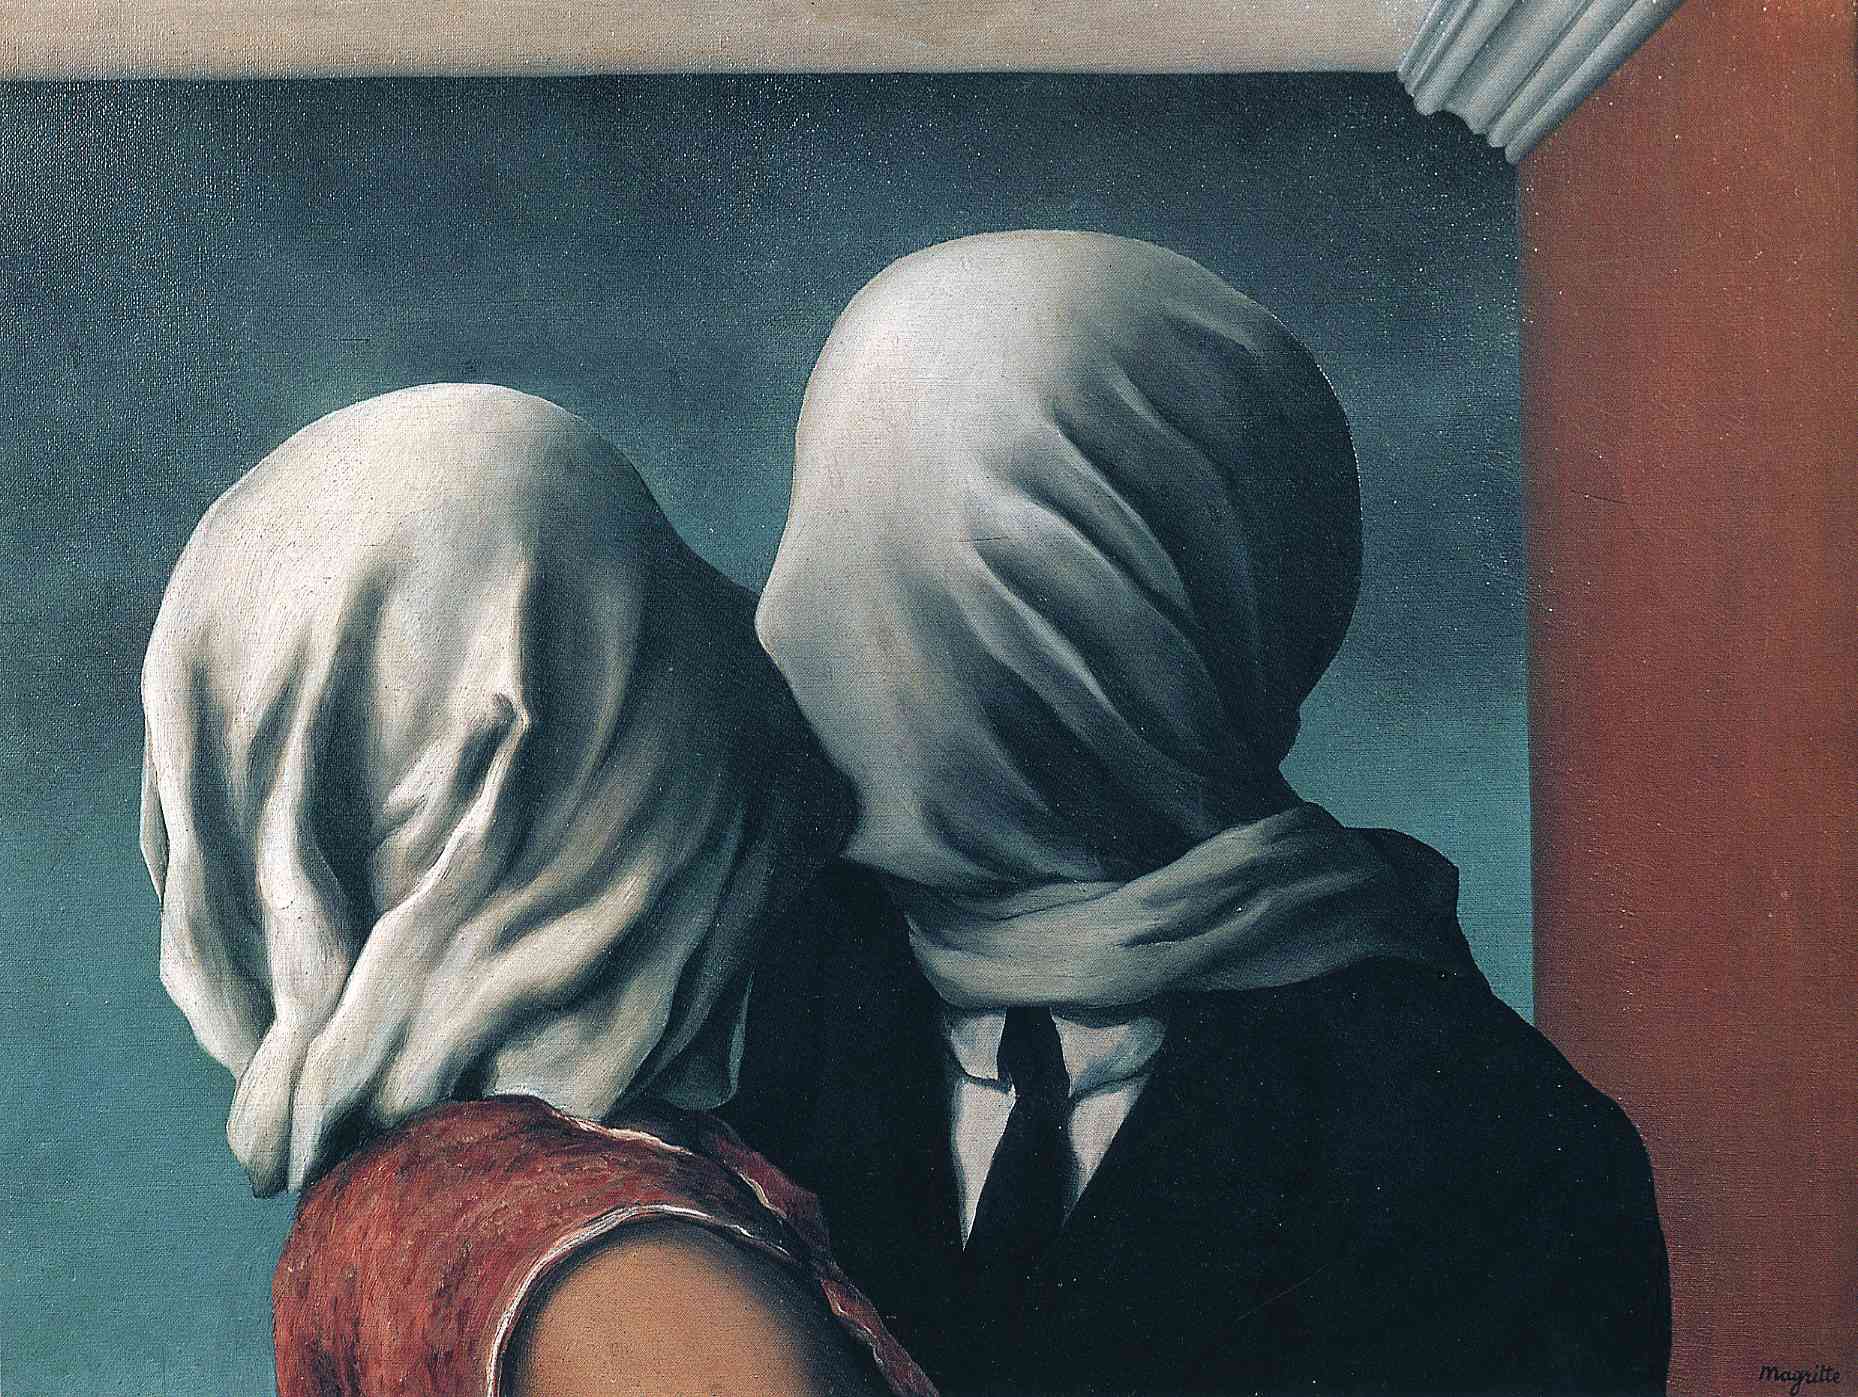 Gli amanti by René Magritte - 1928 -  54 x 73.4 cm Museum of Modern Art